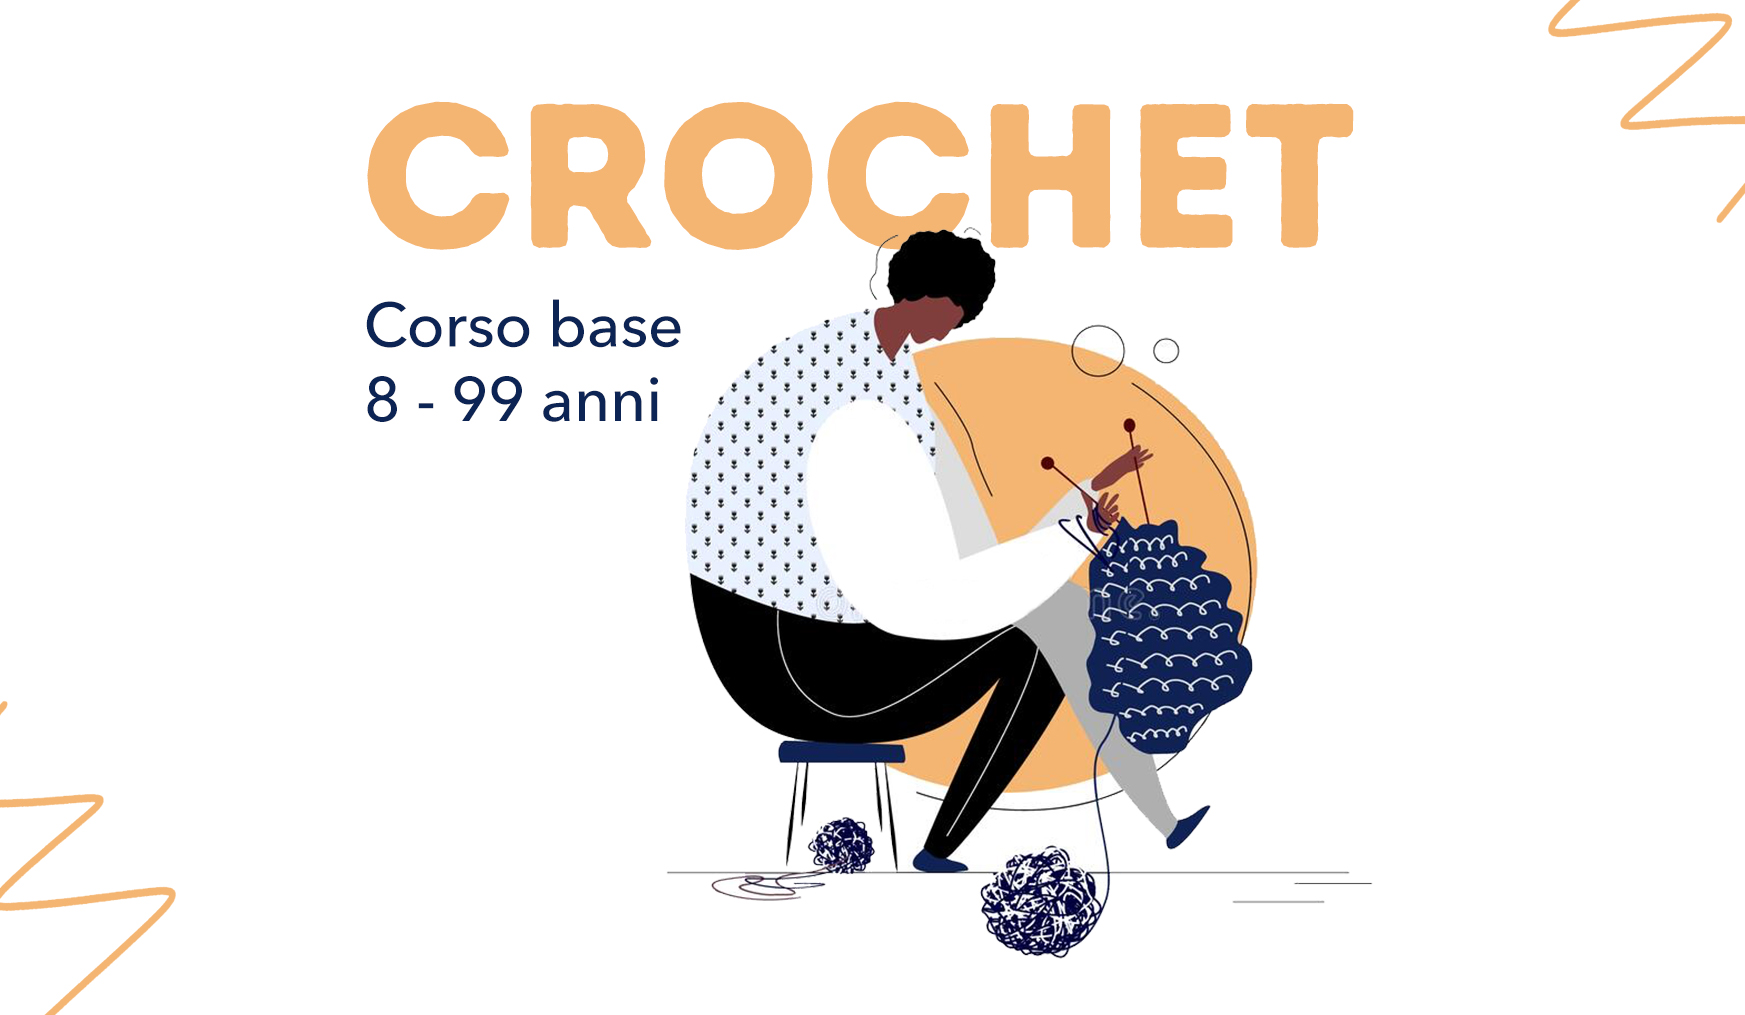 Crochet Corso base 8/99 anni